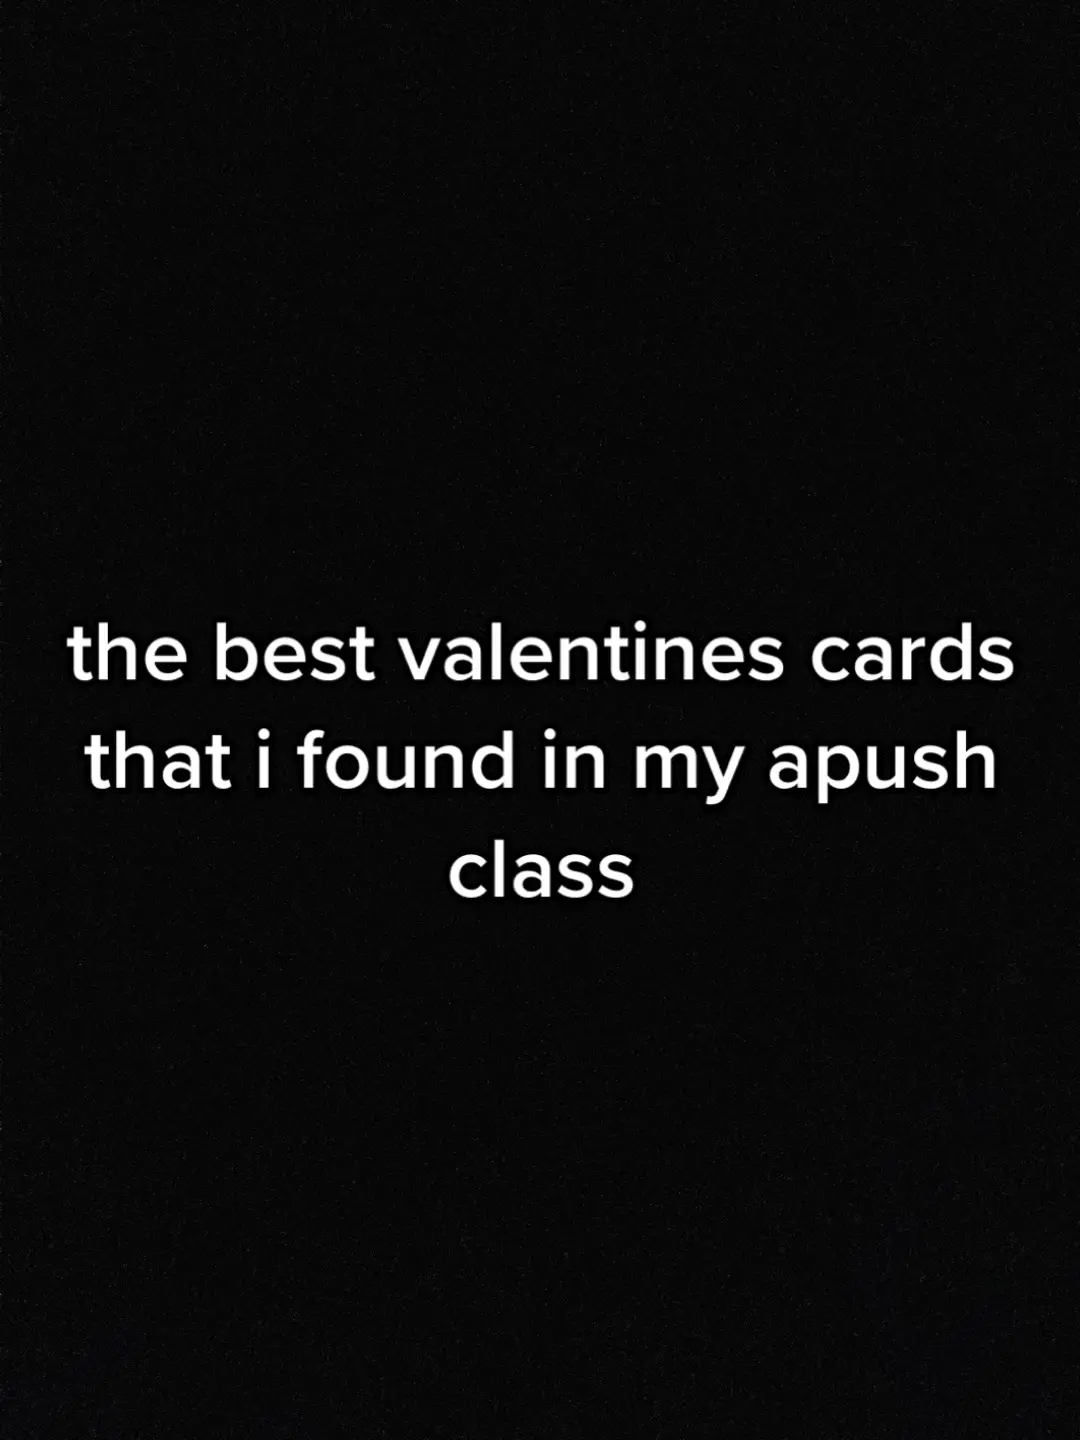 #ValentinesDay #valentines #valentinescards #Love #pickuplines #history #historyclass #apush #apushclass #henryviii #grovercleveland #josephstalin #johnadams #abrahamlincoln #joebiden #georgewashington #barackobama 